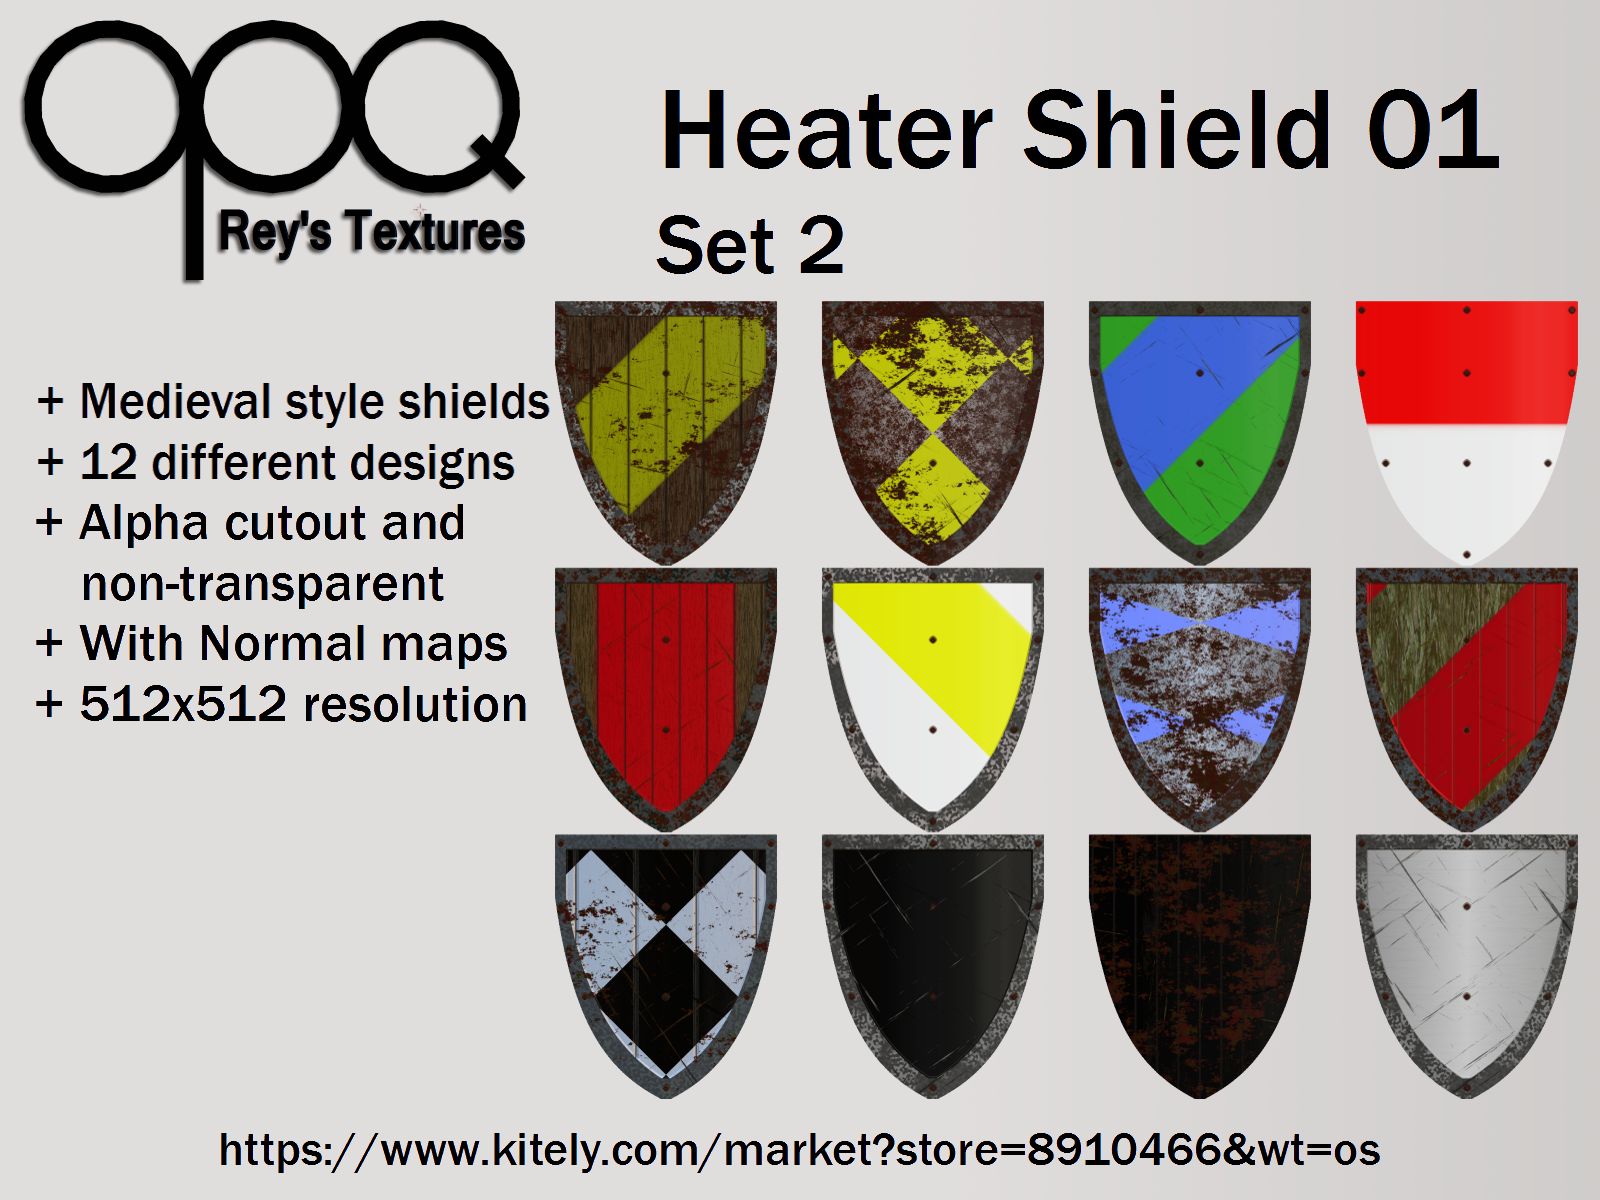 Rey's Heater Shield 01 Set 2 Poster Kitely.jpg